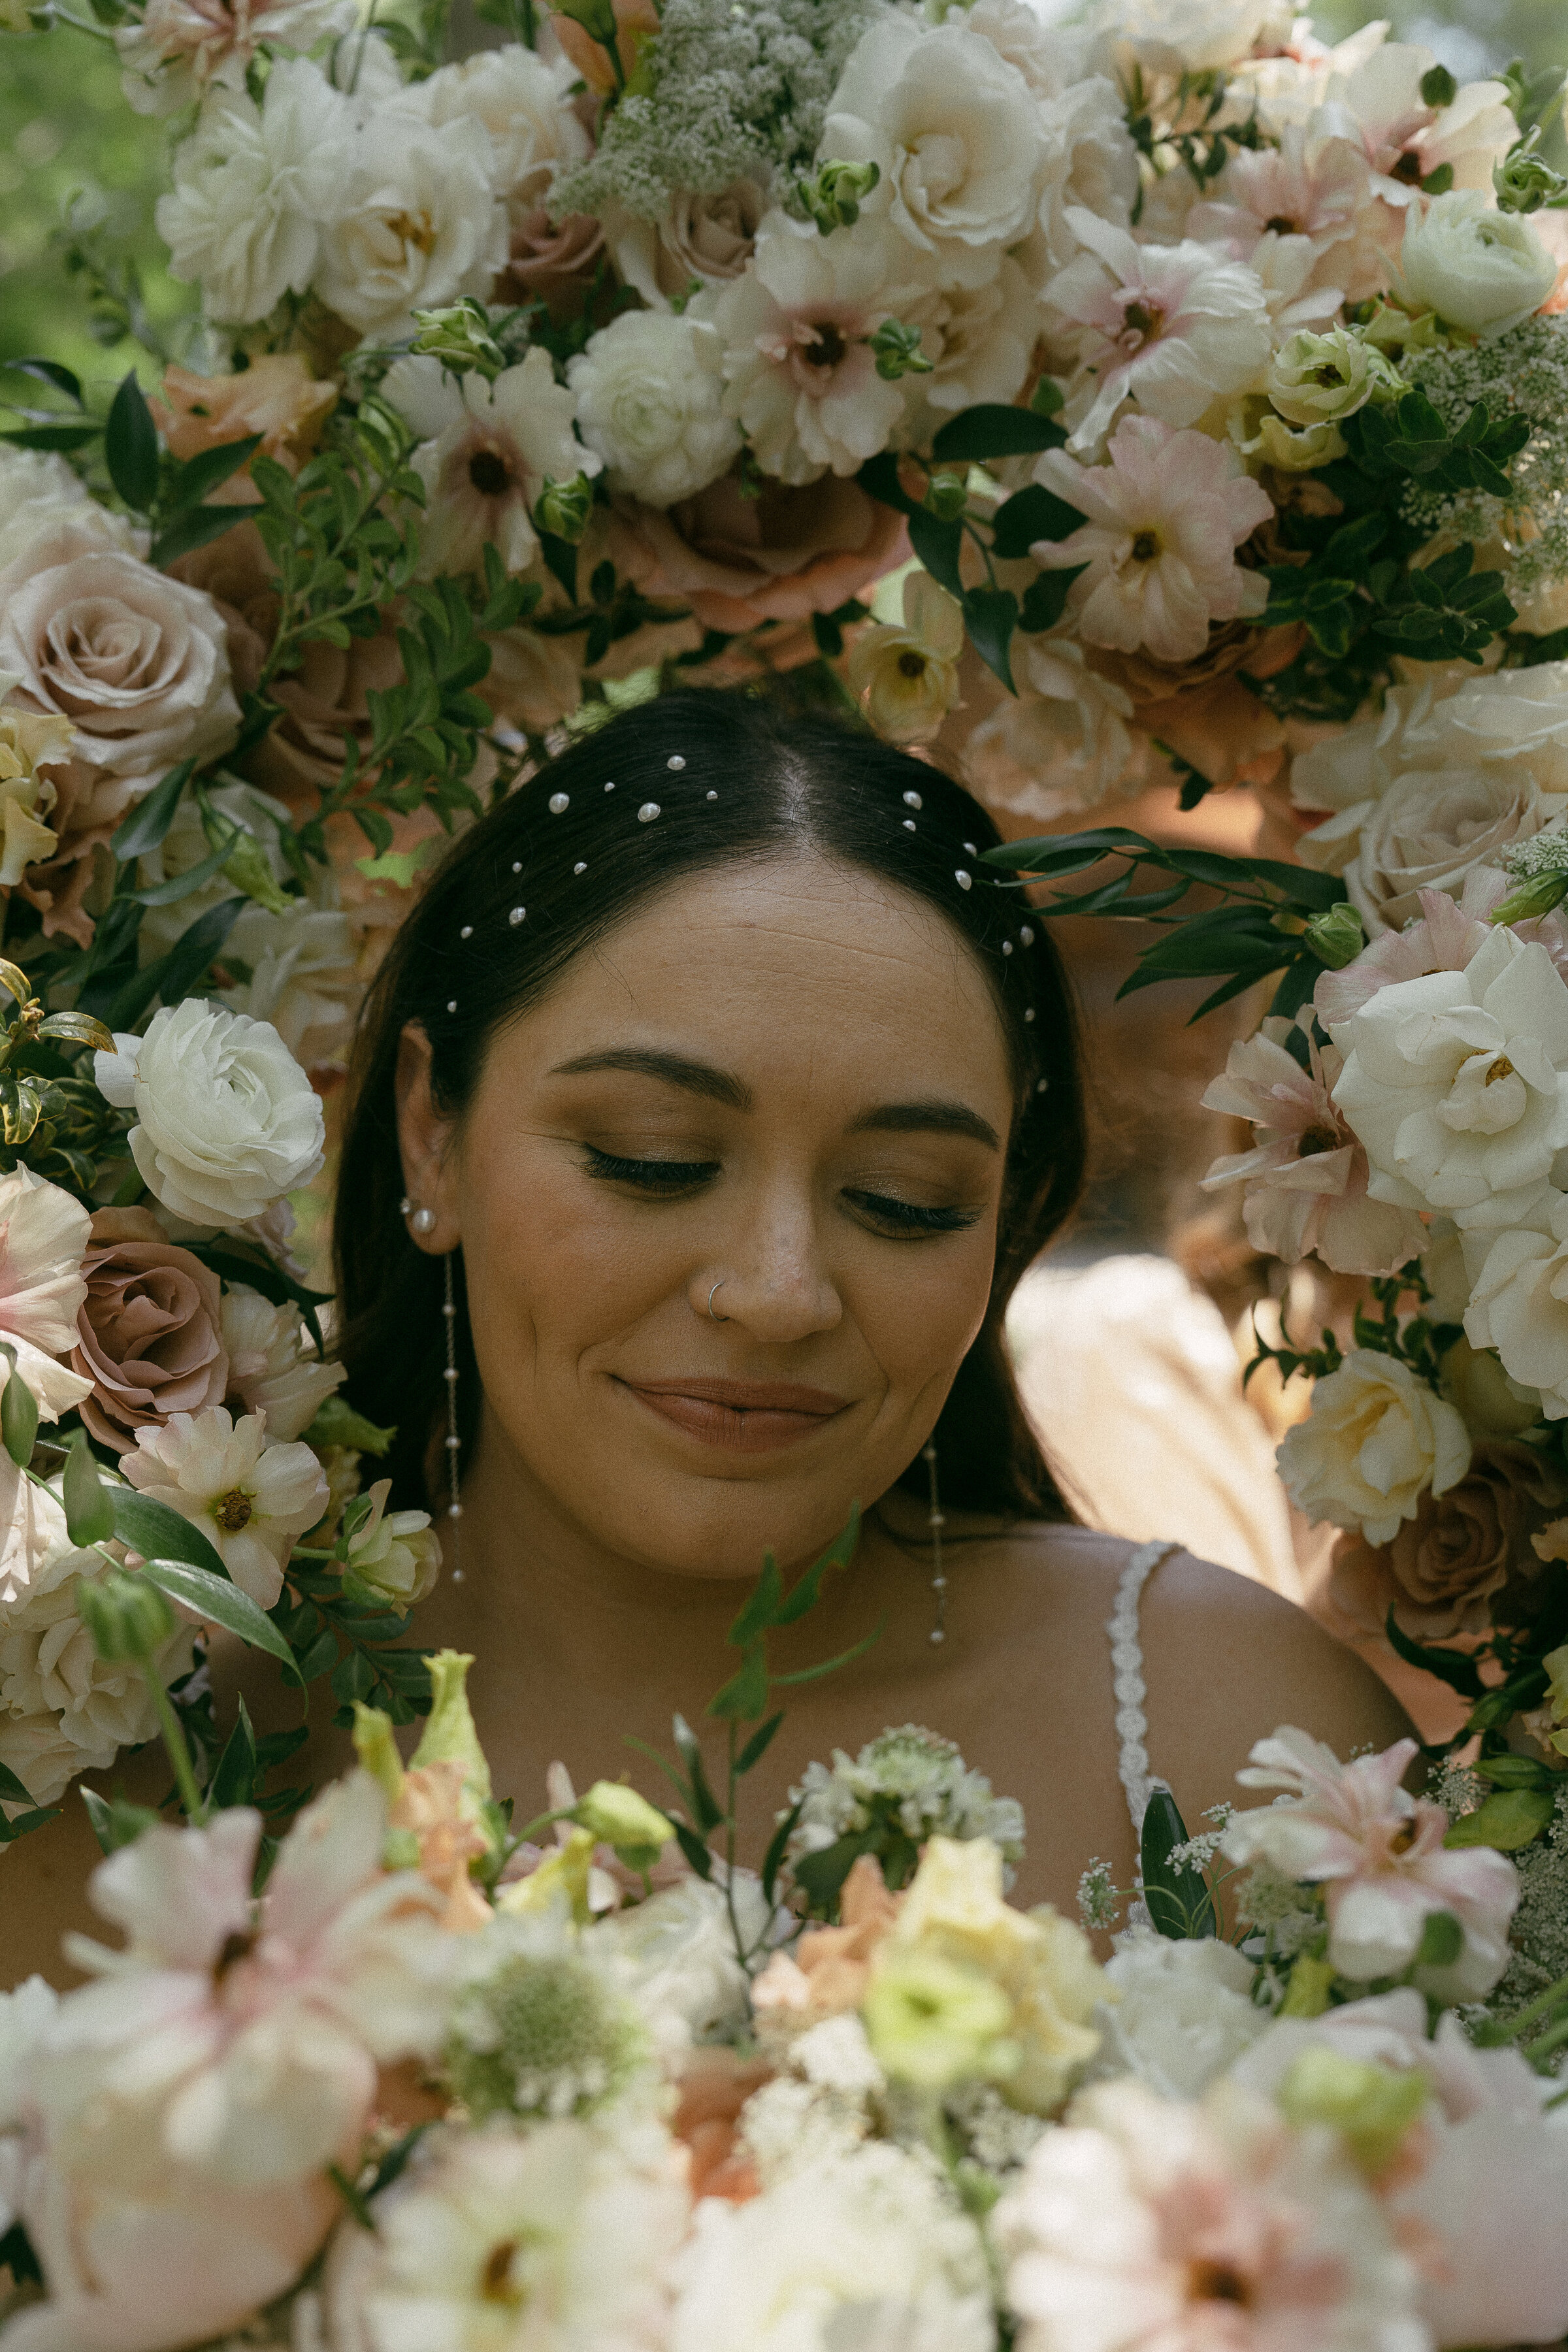 Bride smiling surrounded by floral arrangement, intimate wedding portrait.